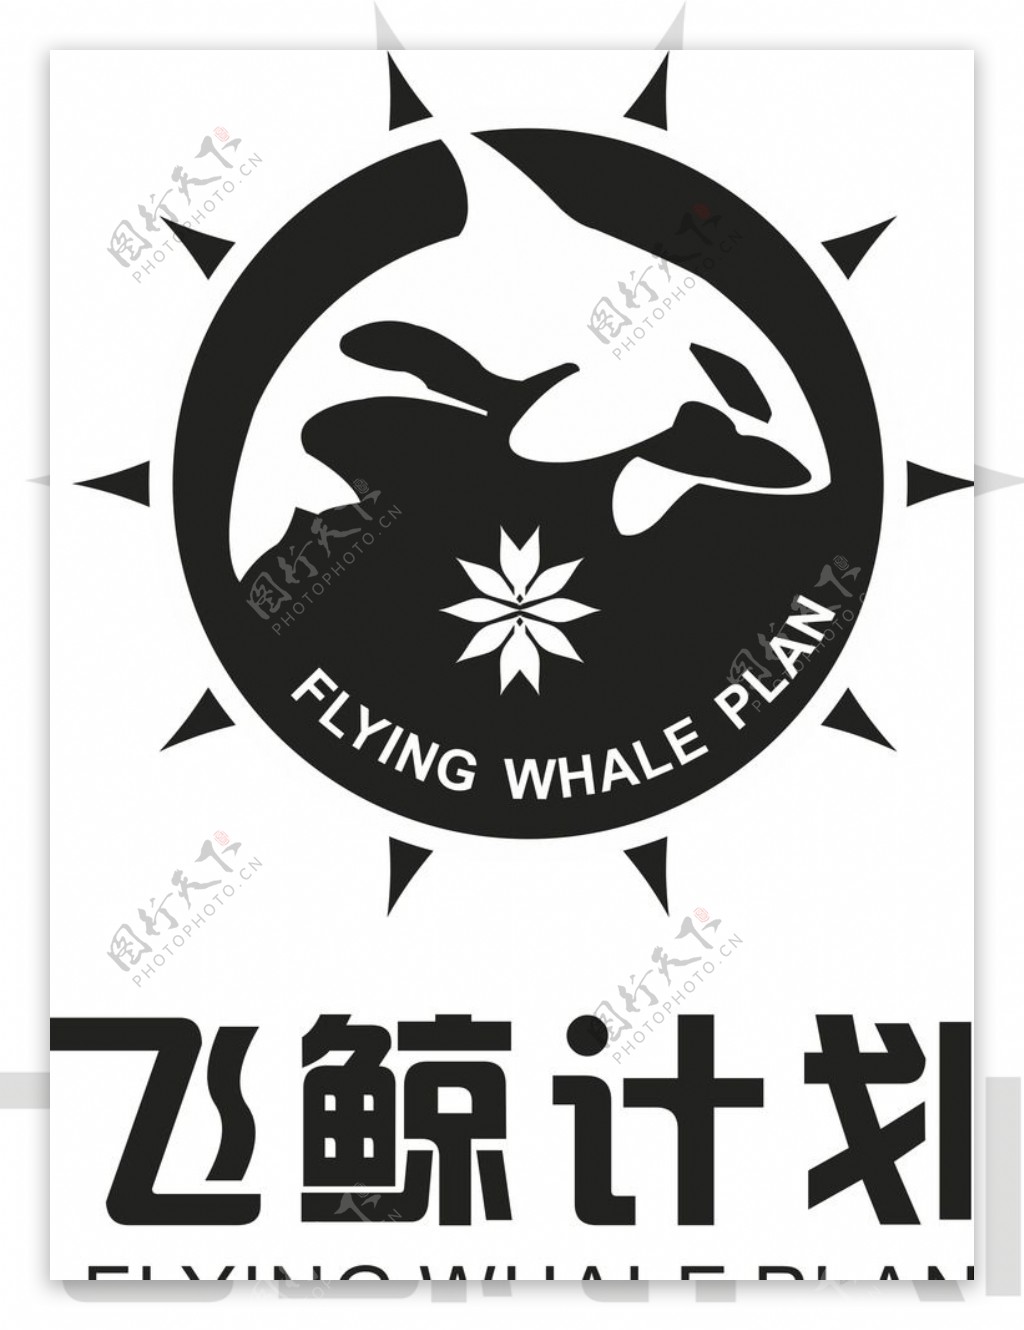 飞鲸logo